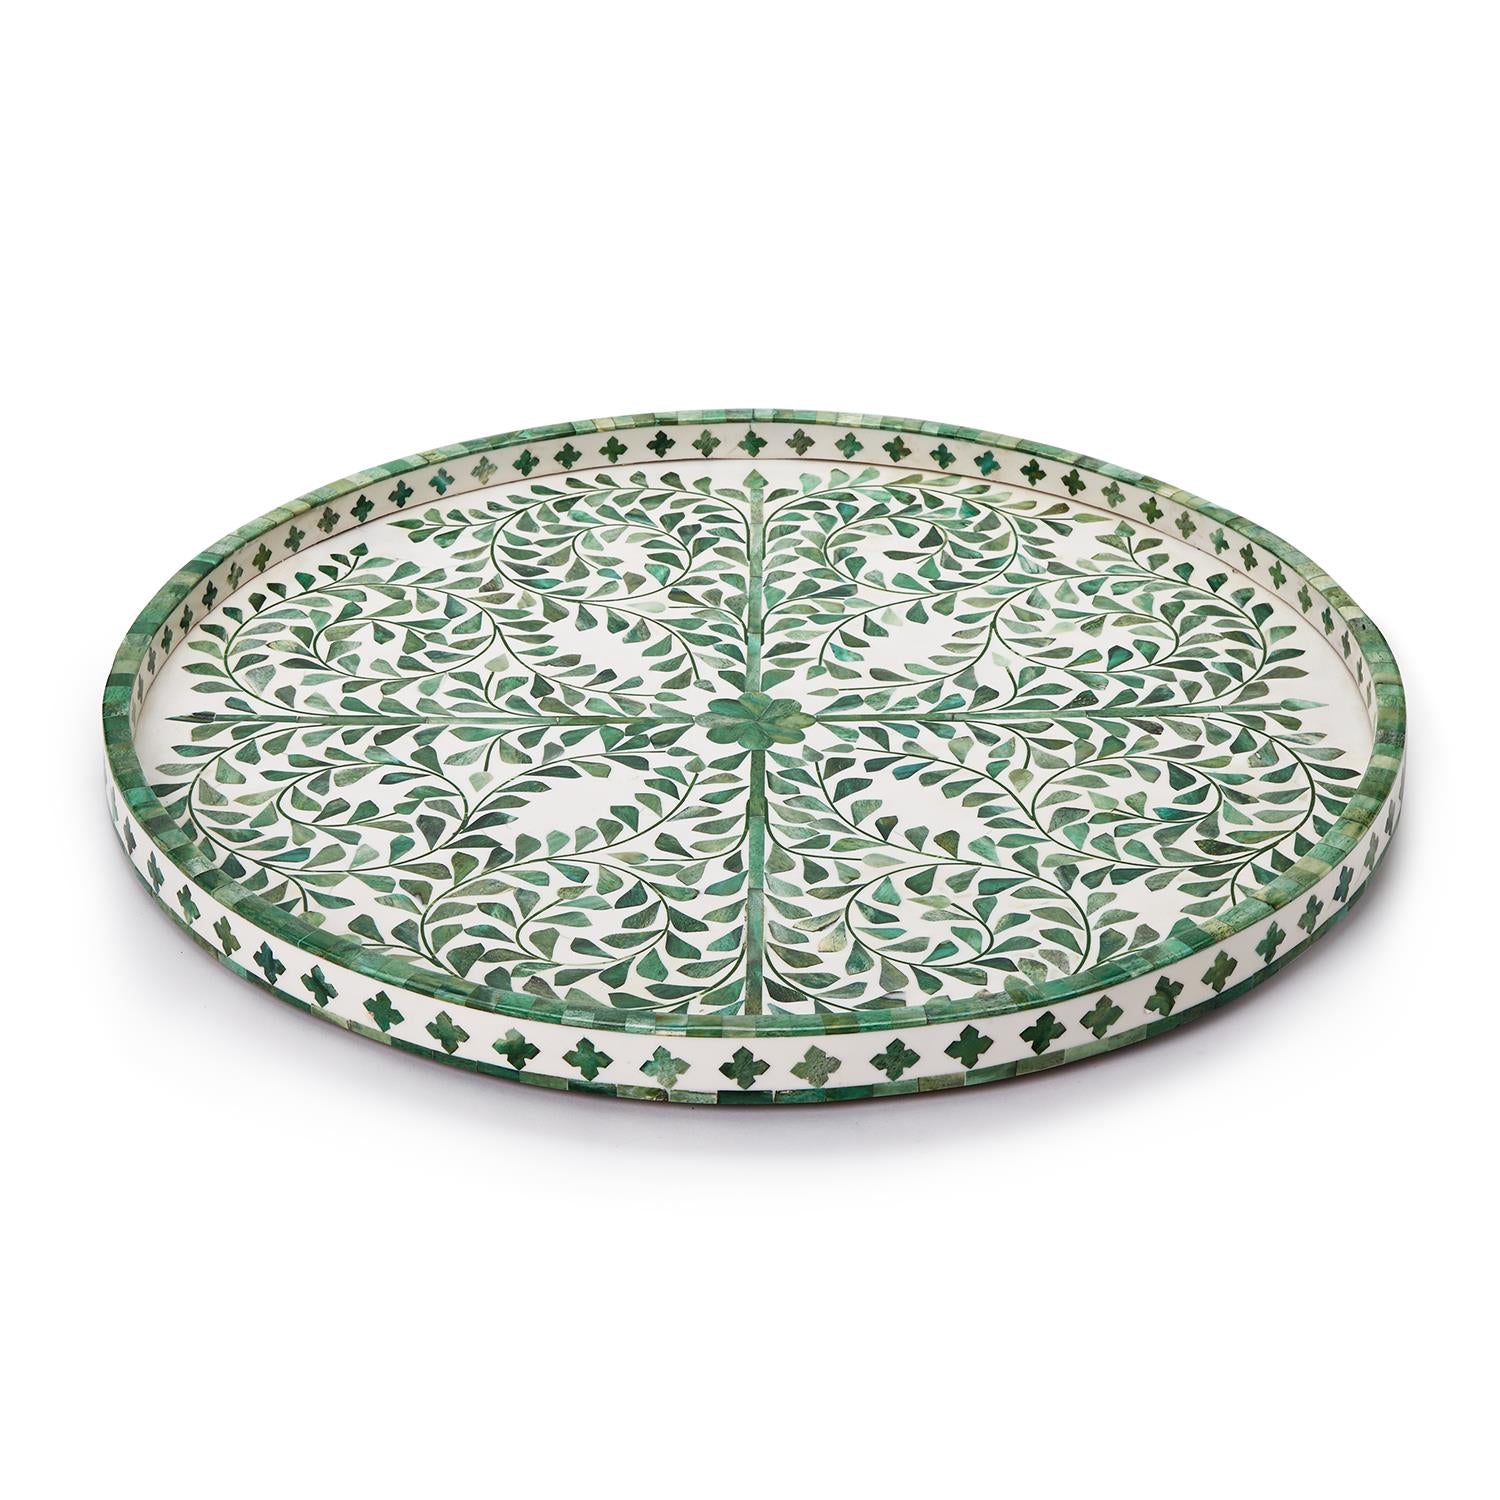 Jaipur Palace Green/White Inlaid Decorative Round Serving Tray